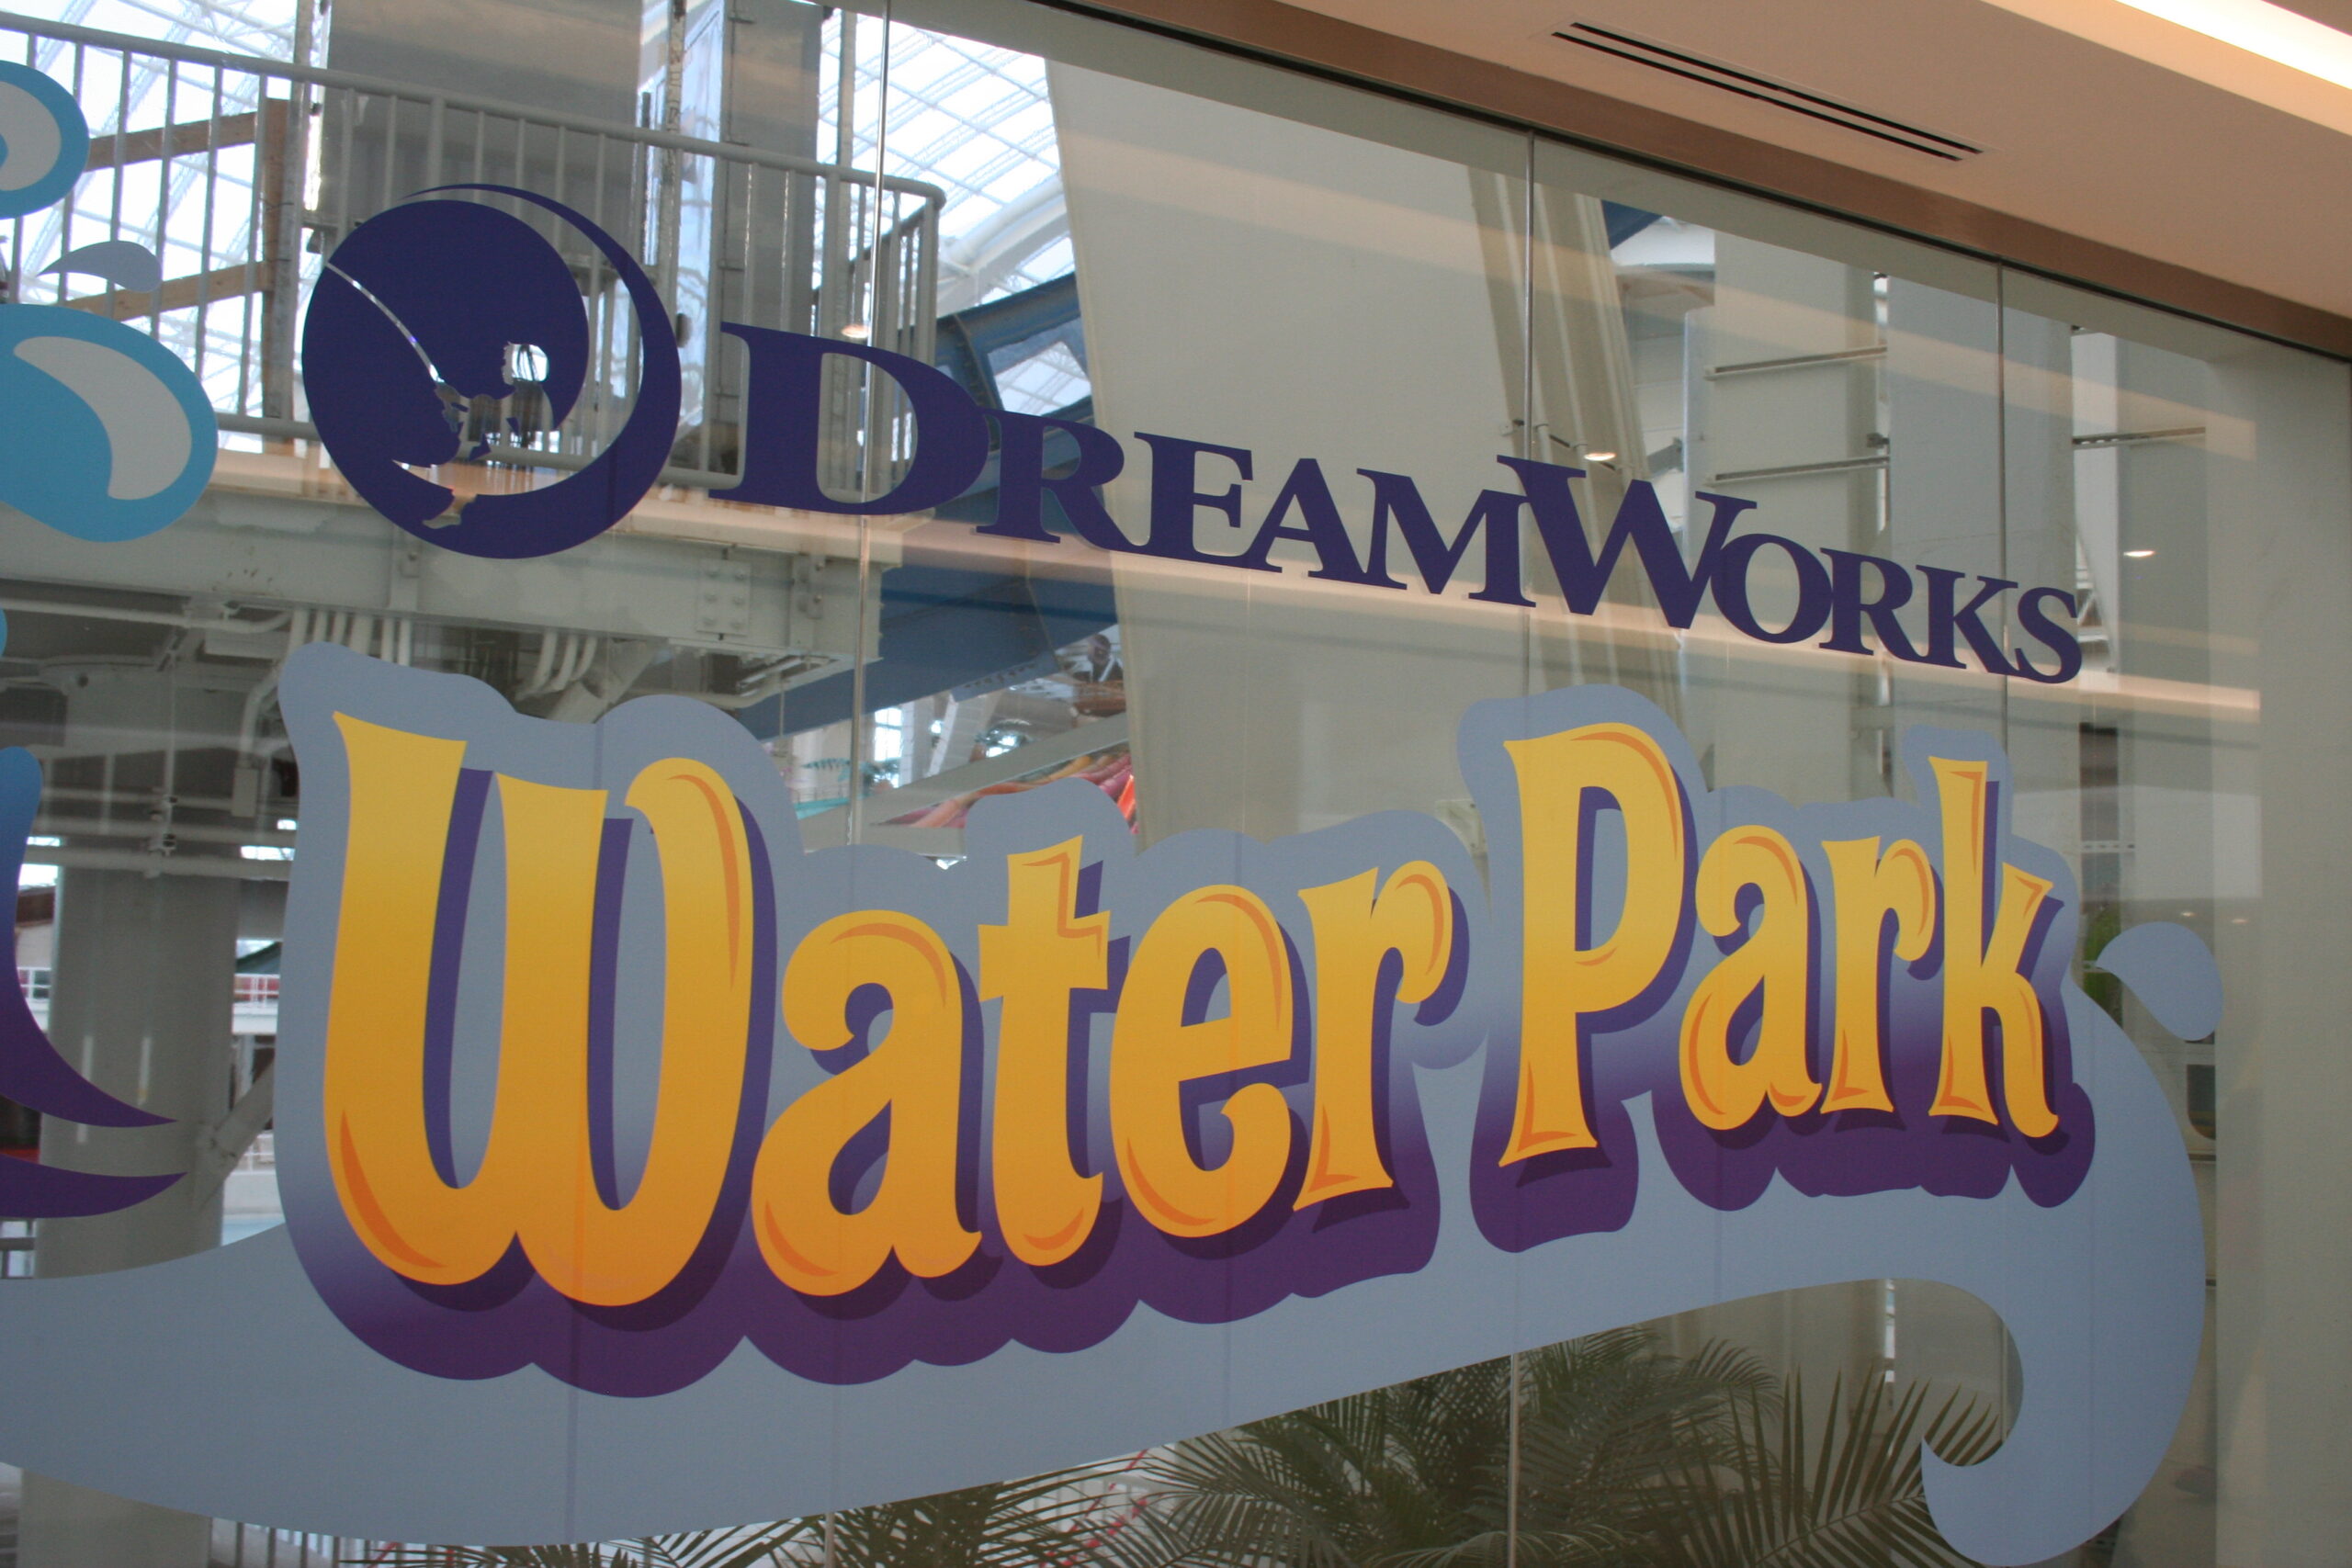 American Dream: Dreamworks Indoor Water Park Entry Ticket